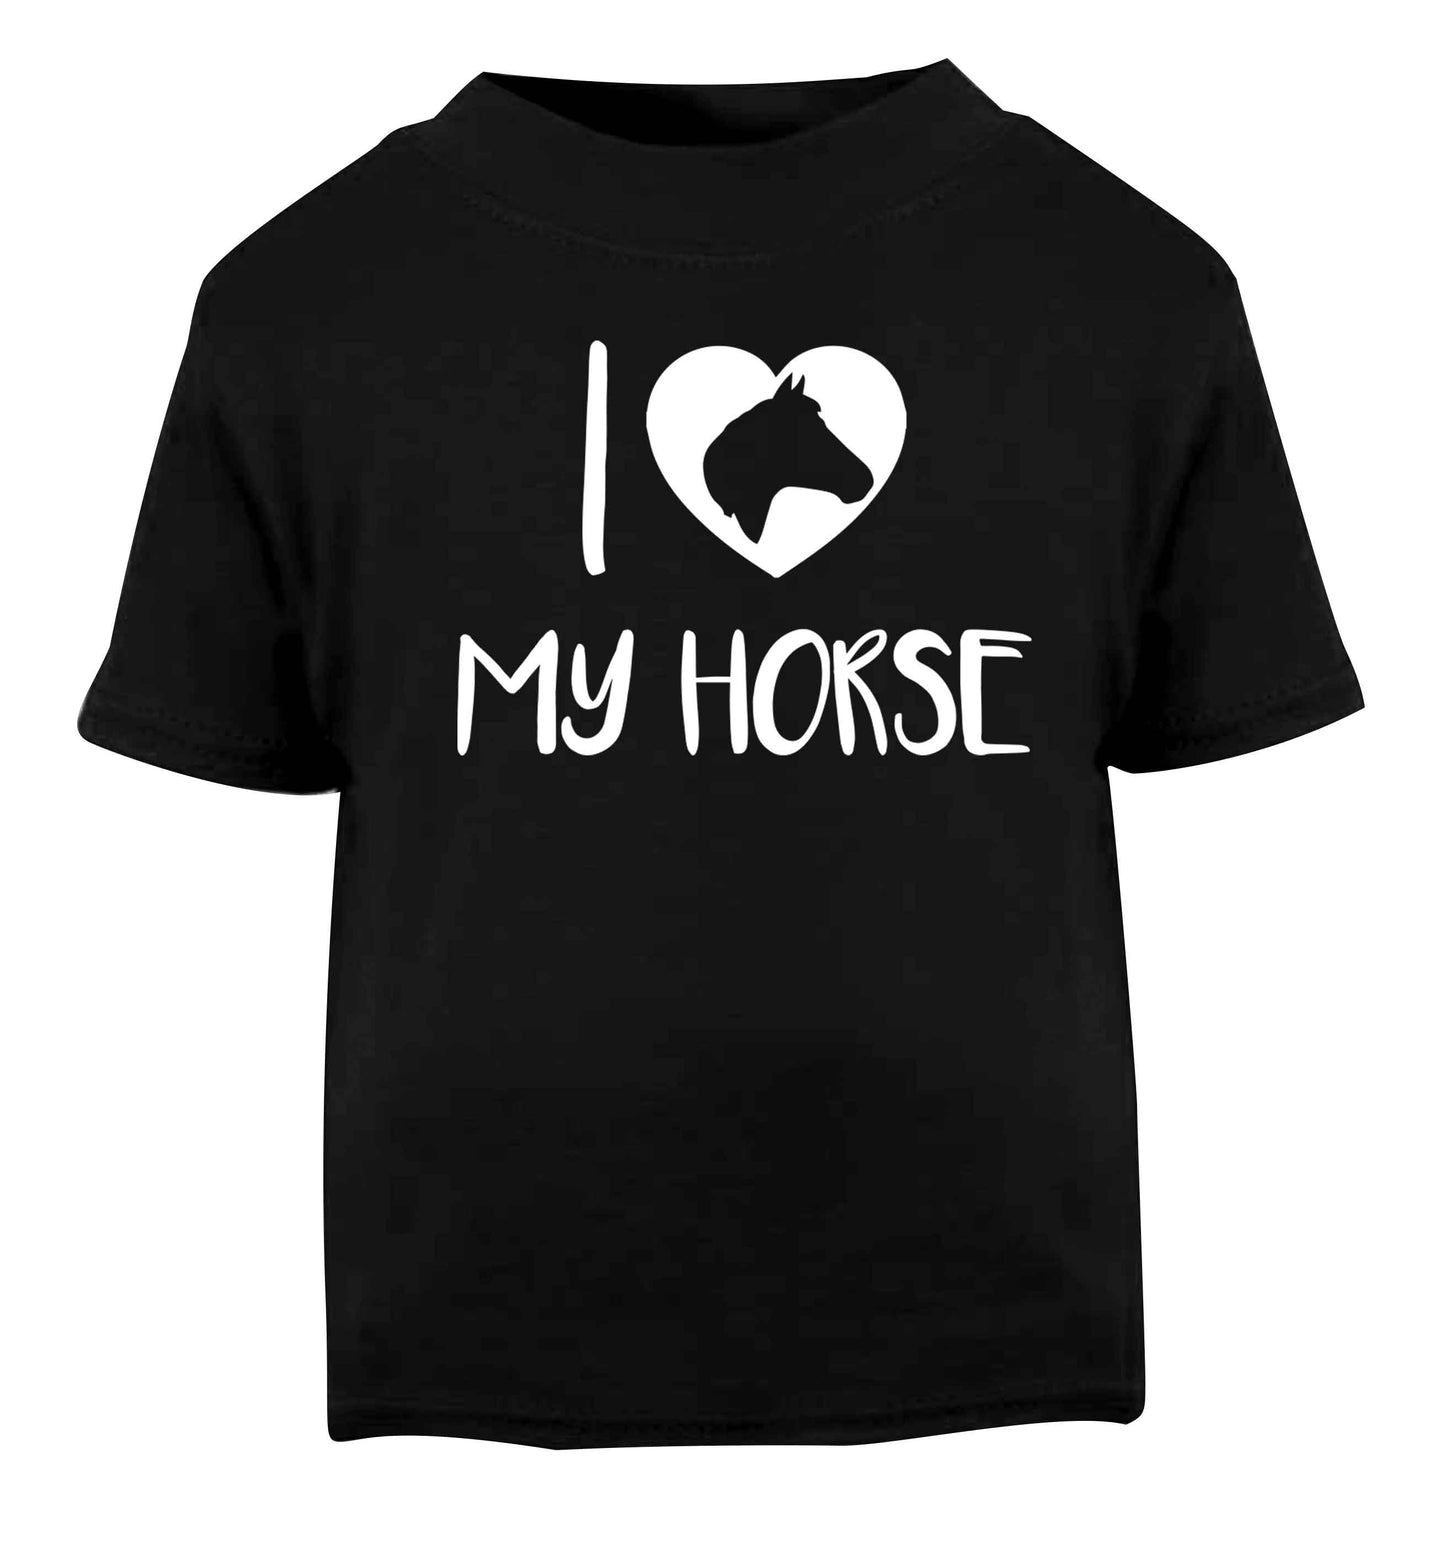 I love my horse Black baby toddler Tshirt 2 years